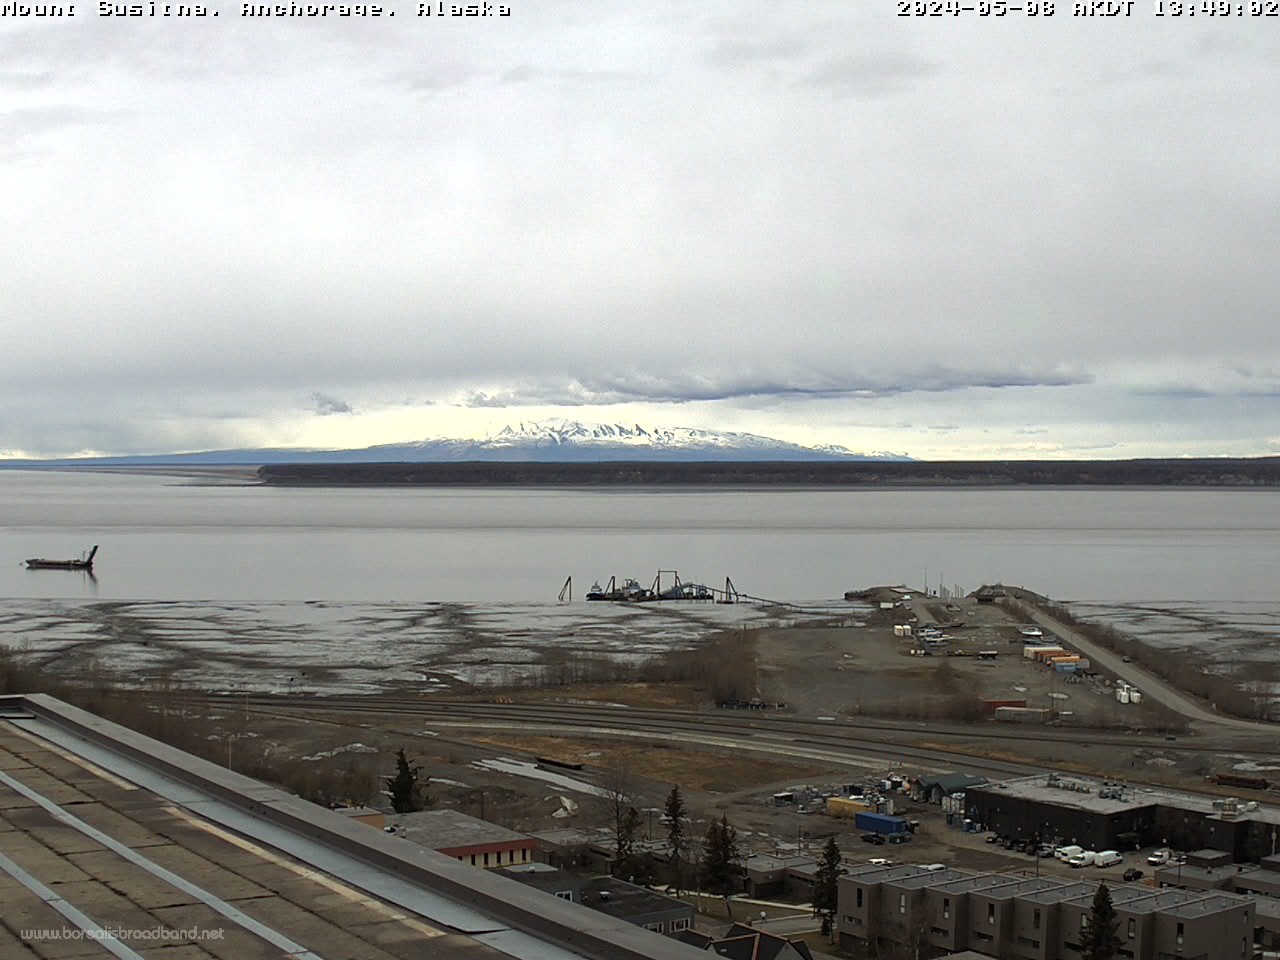 Mount Susitna, Alaska Sab. 13:49